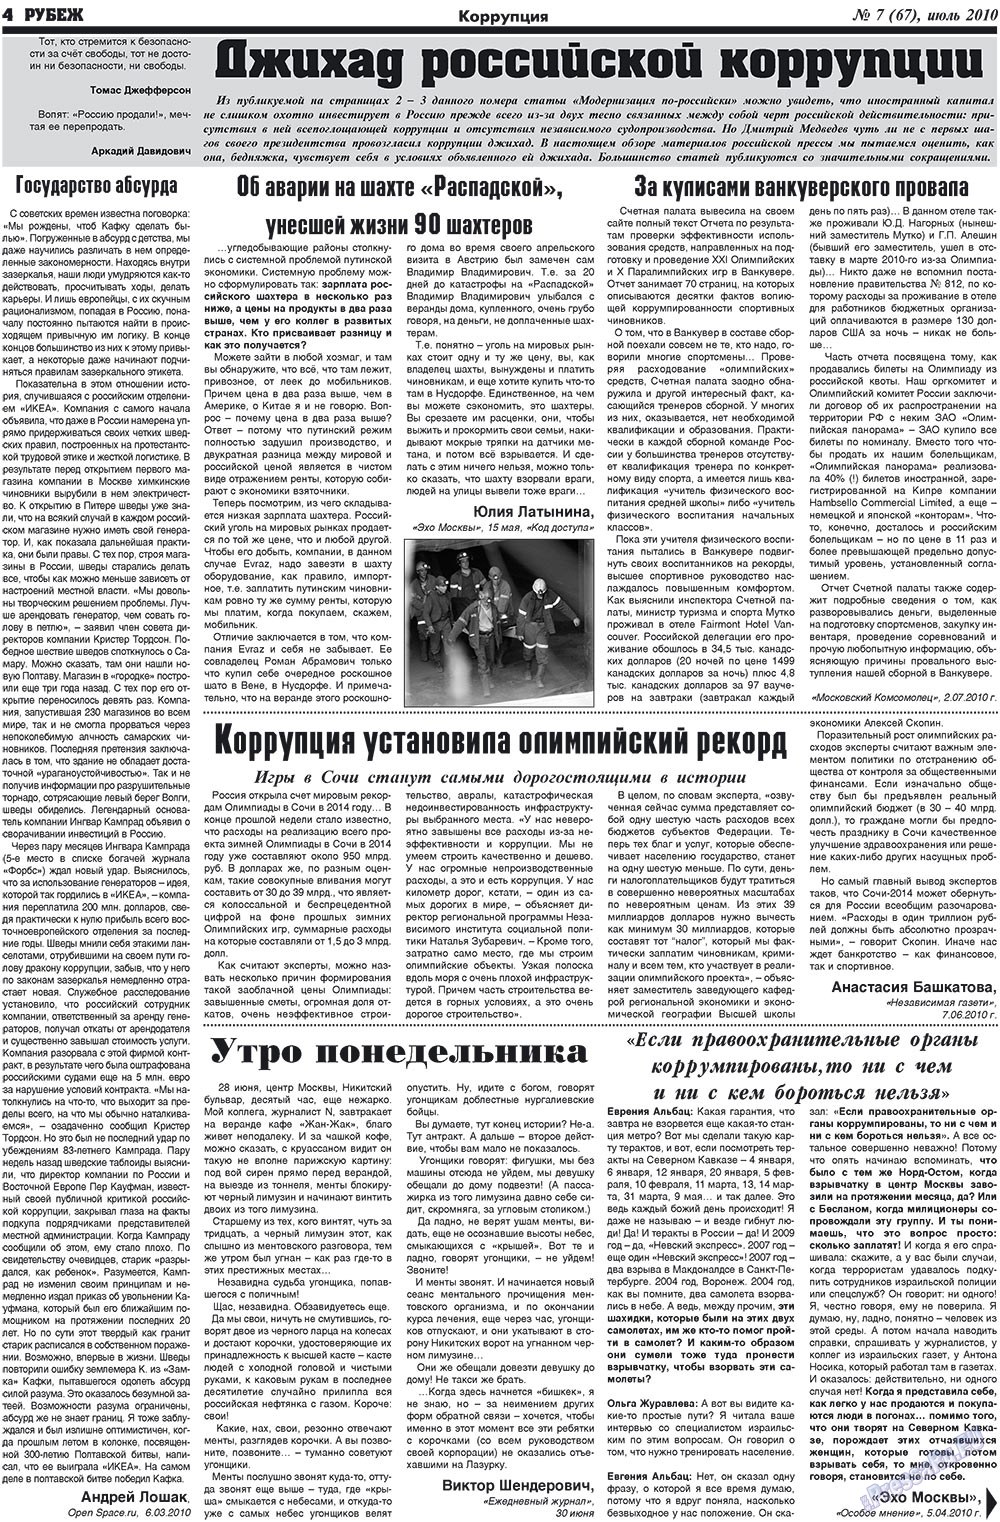 Рубеж, газета. 2010 №7 стр.4